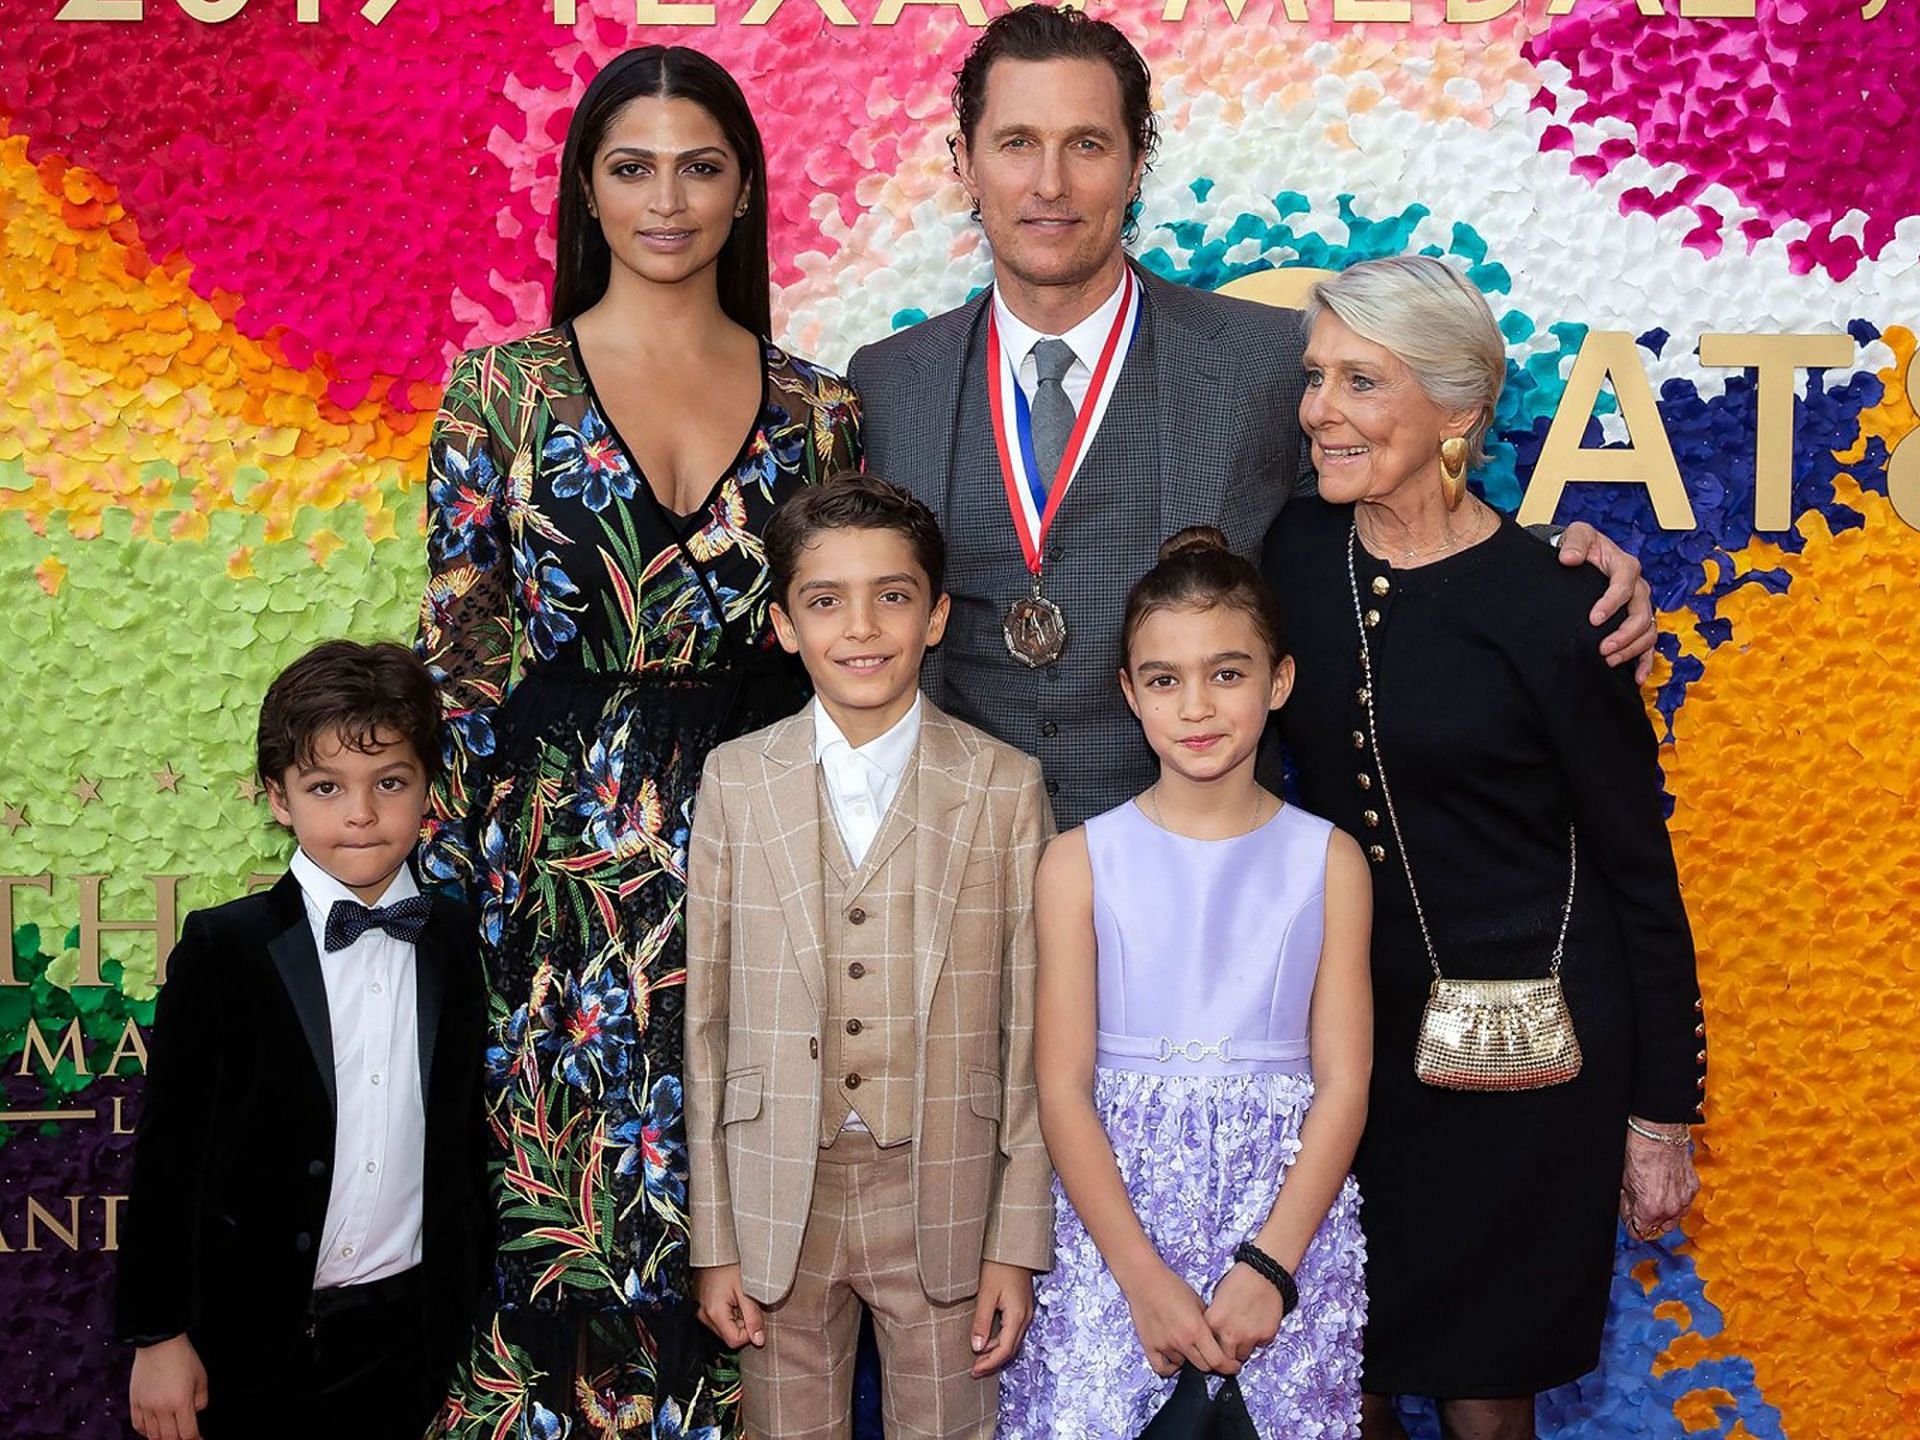 Matthew McConaughey and his family (Image via Suzanne Cordeiro/Shutterstock)